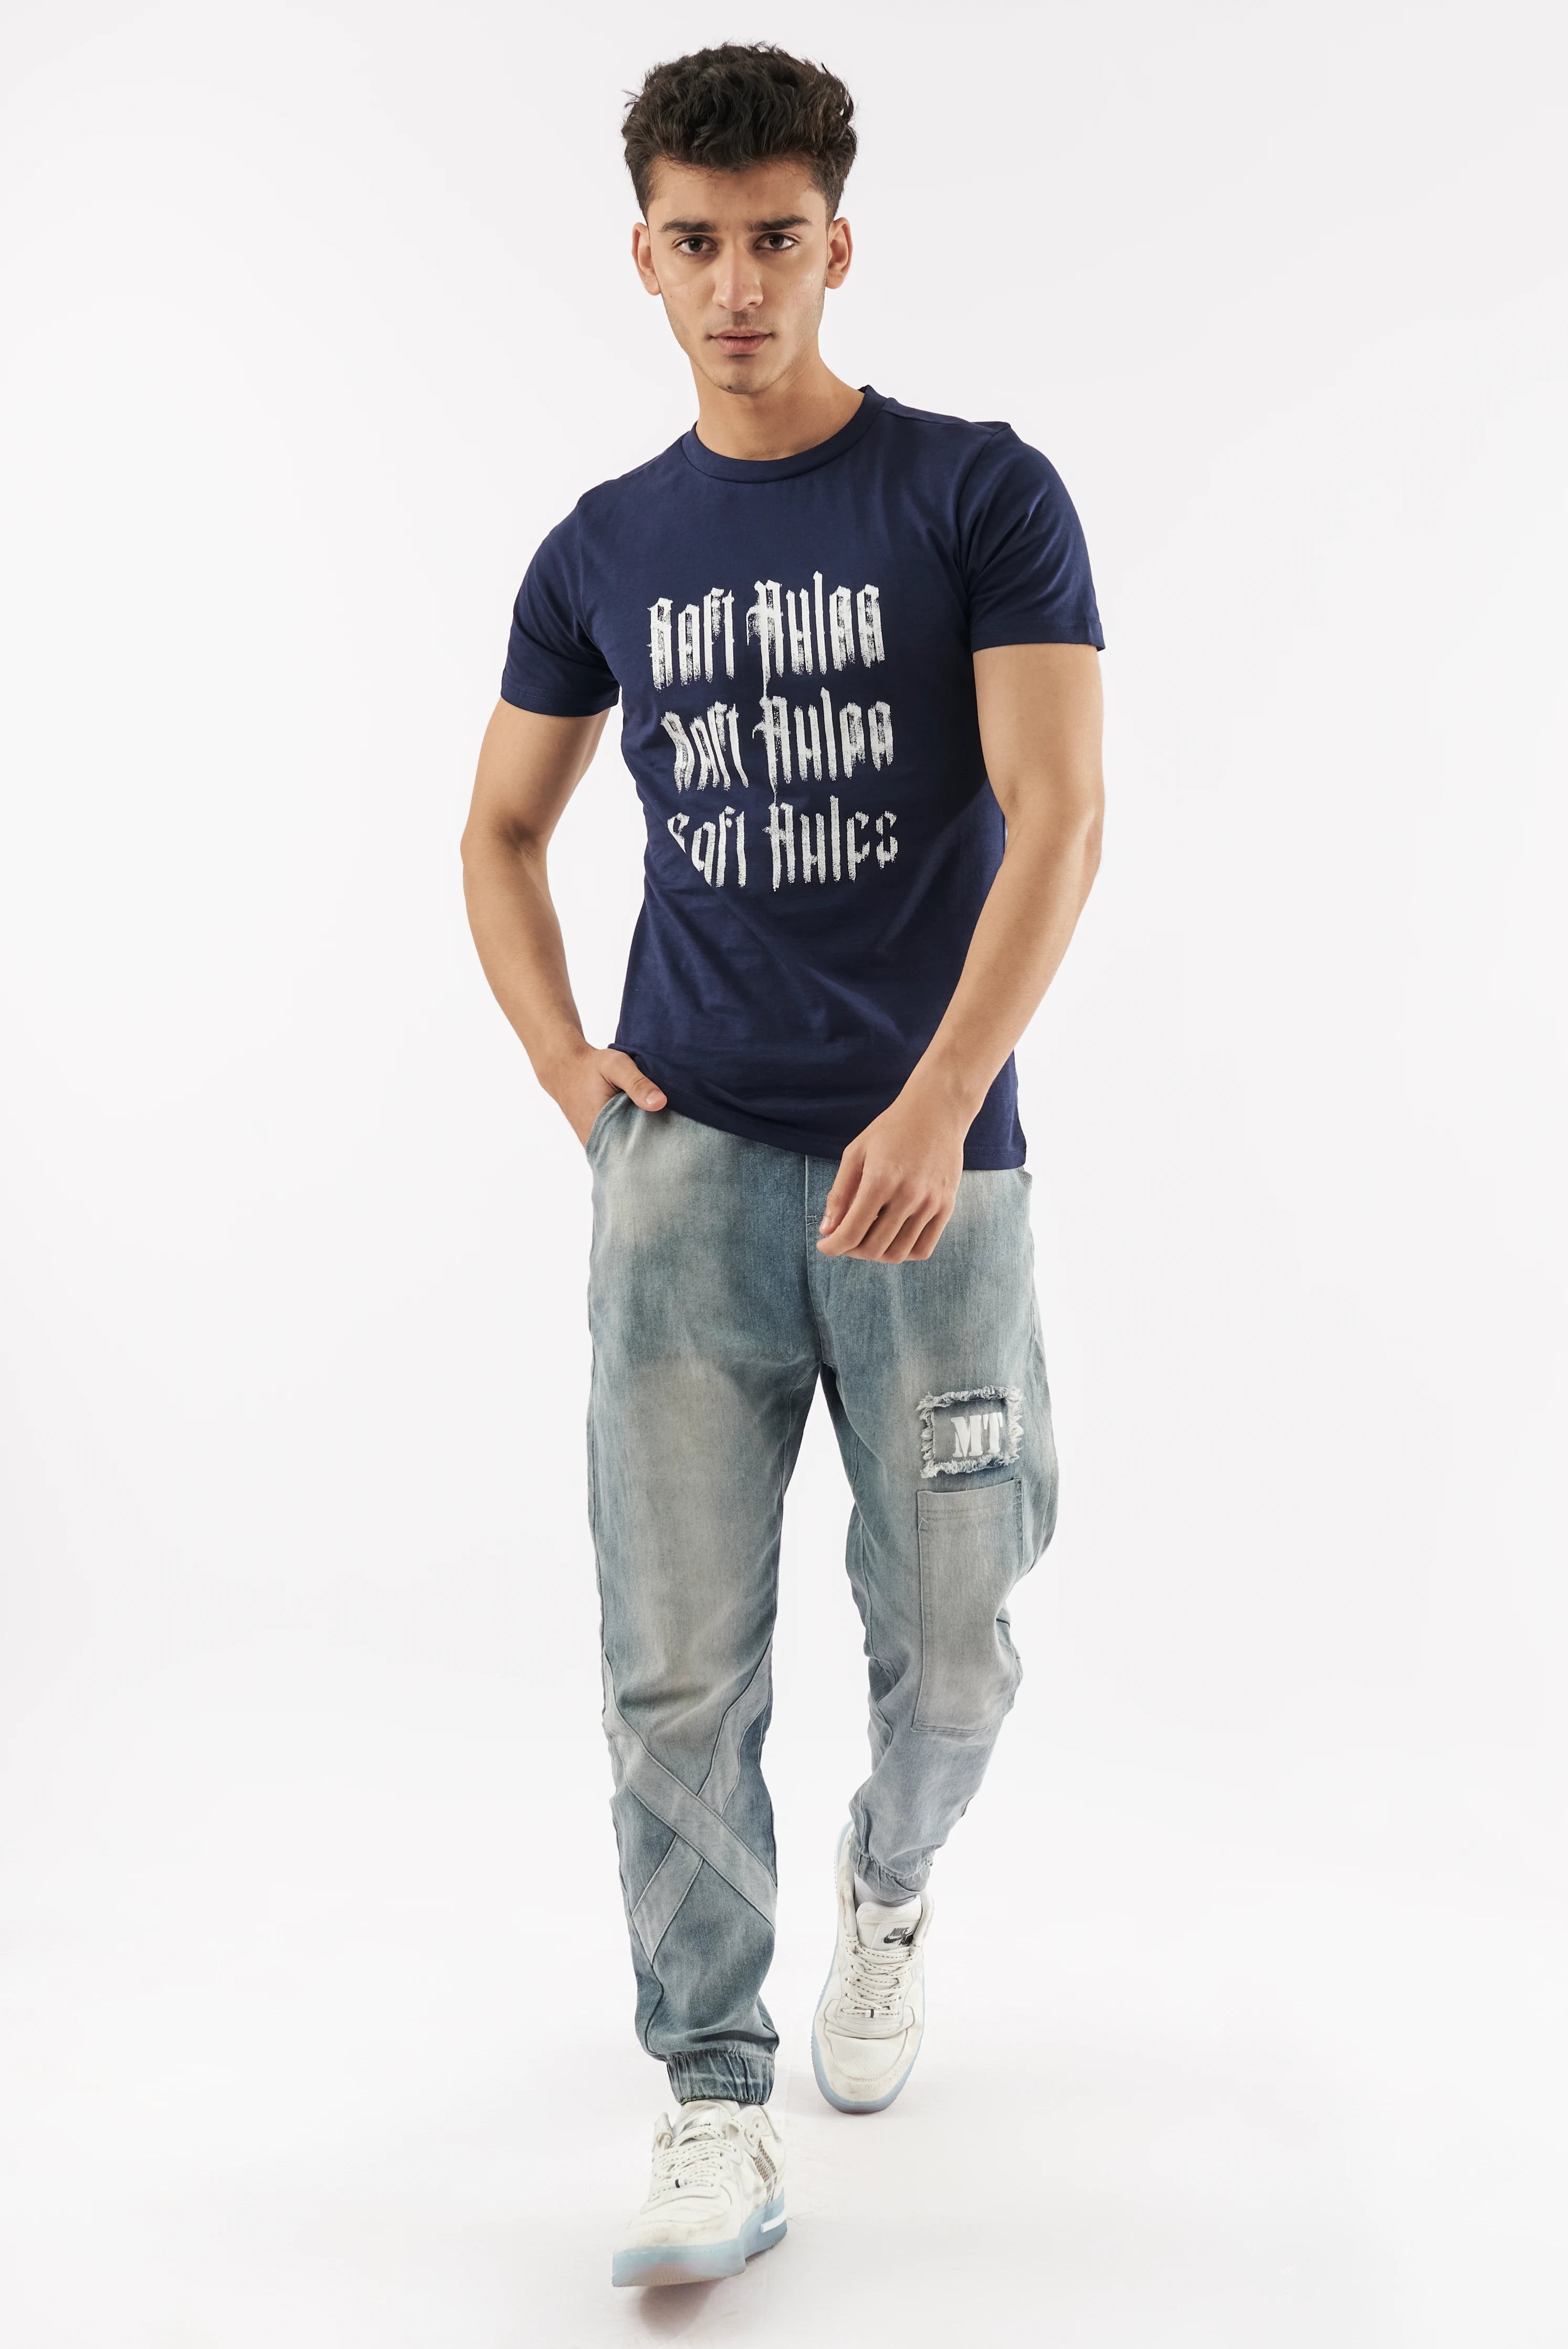 Men's Rules Graphics T-Shirt Navy